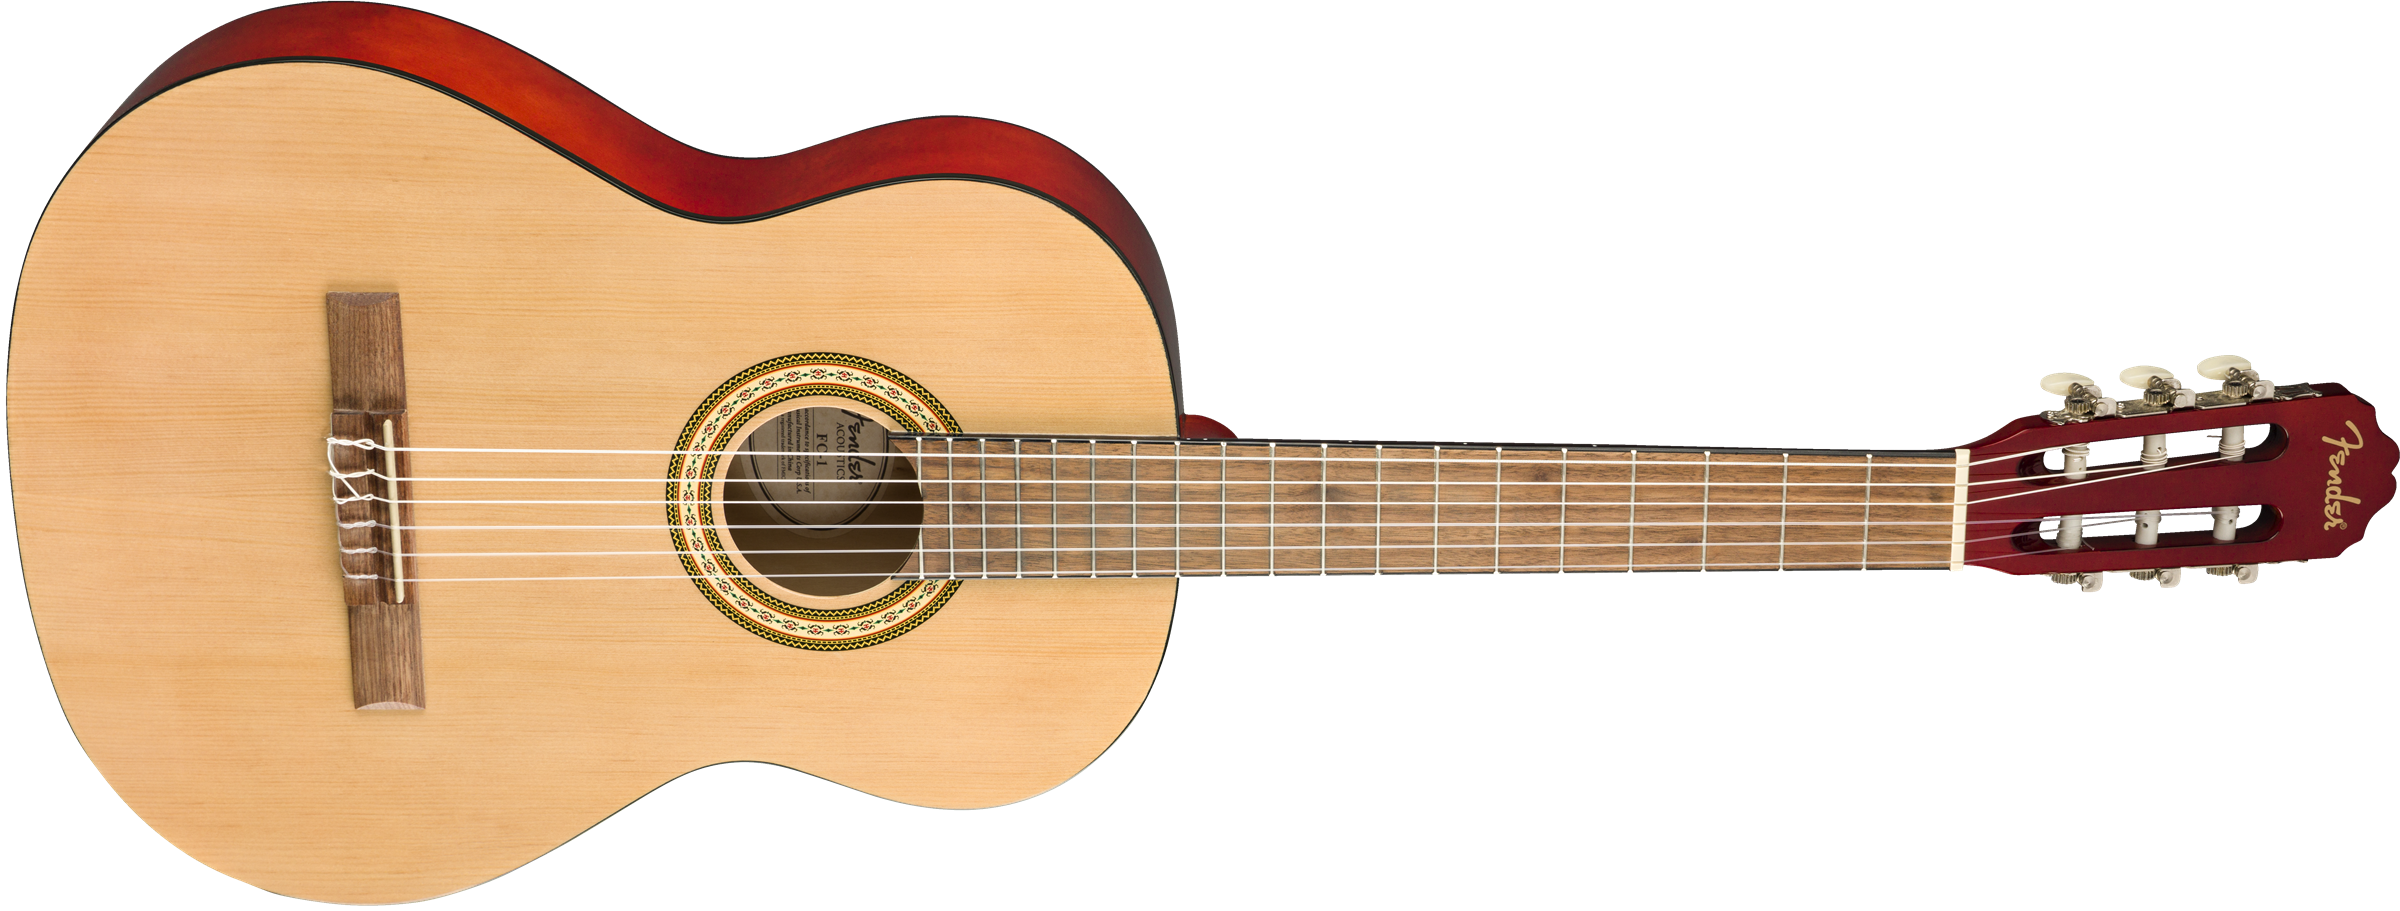 Sobriqueta Nacional avaro Comprar Fender FC1 Wn Guitarra Clásica Natural | Musicopolix